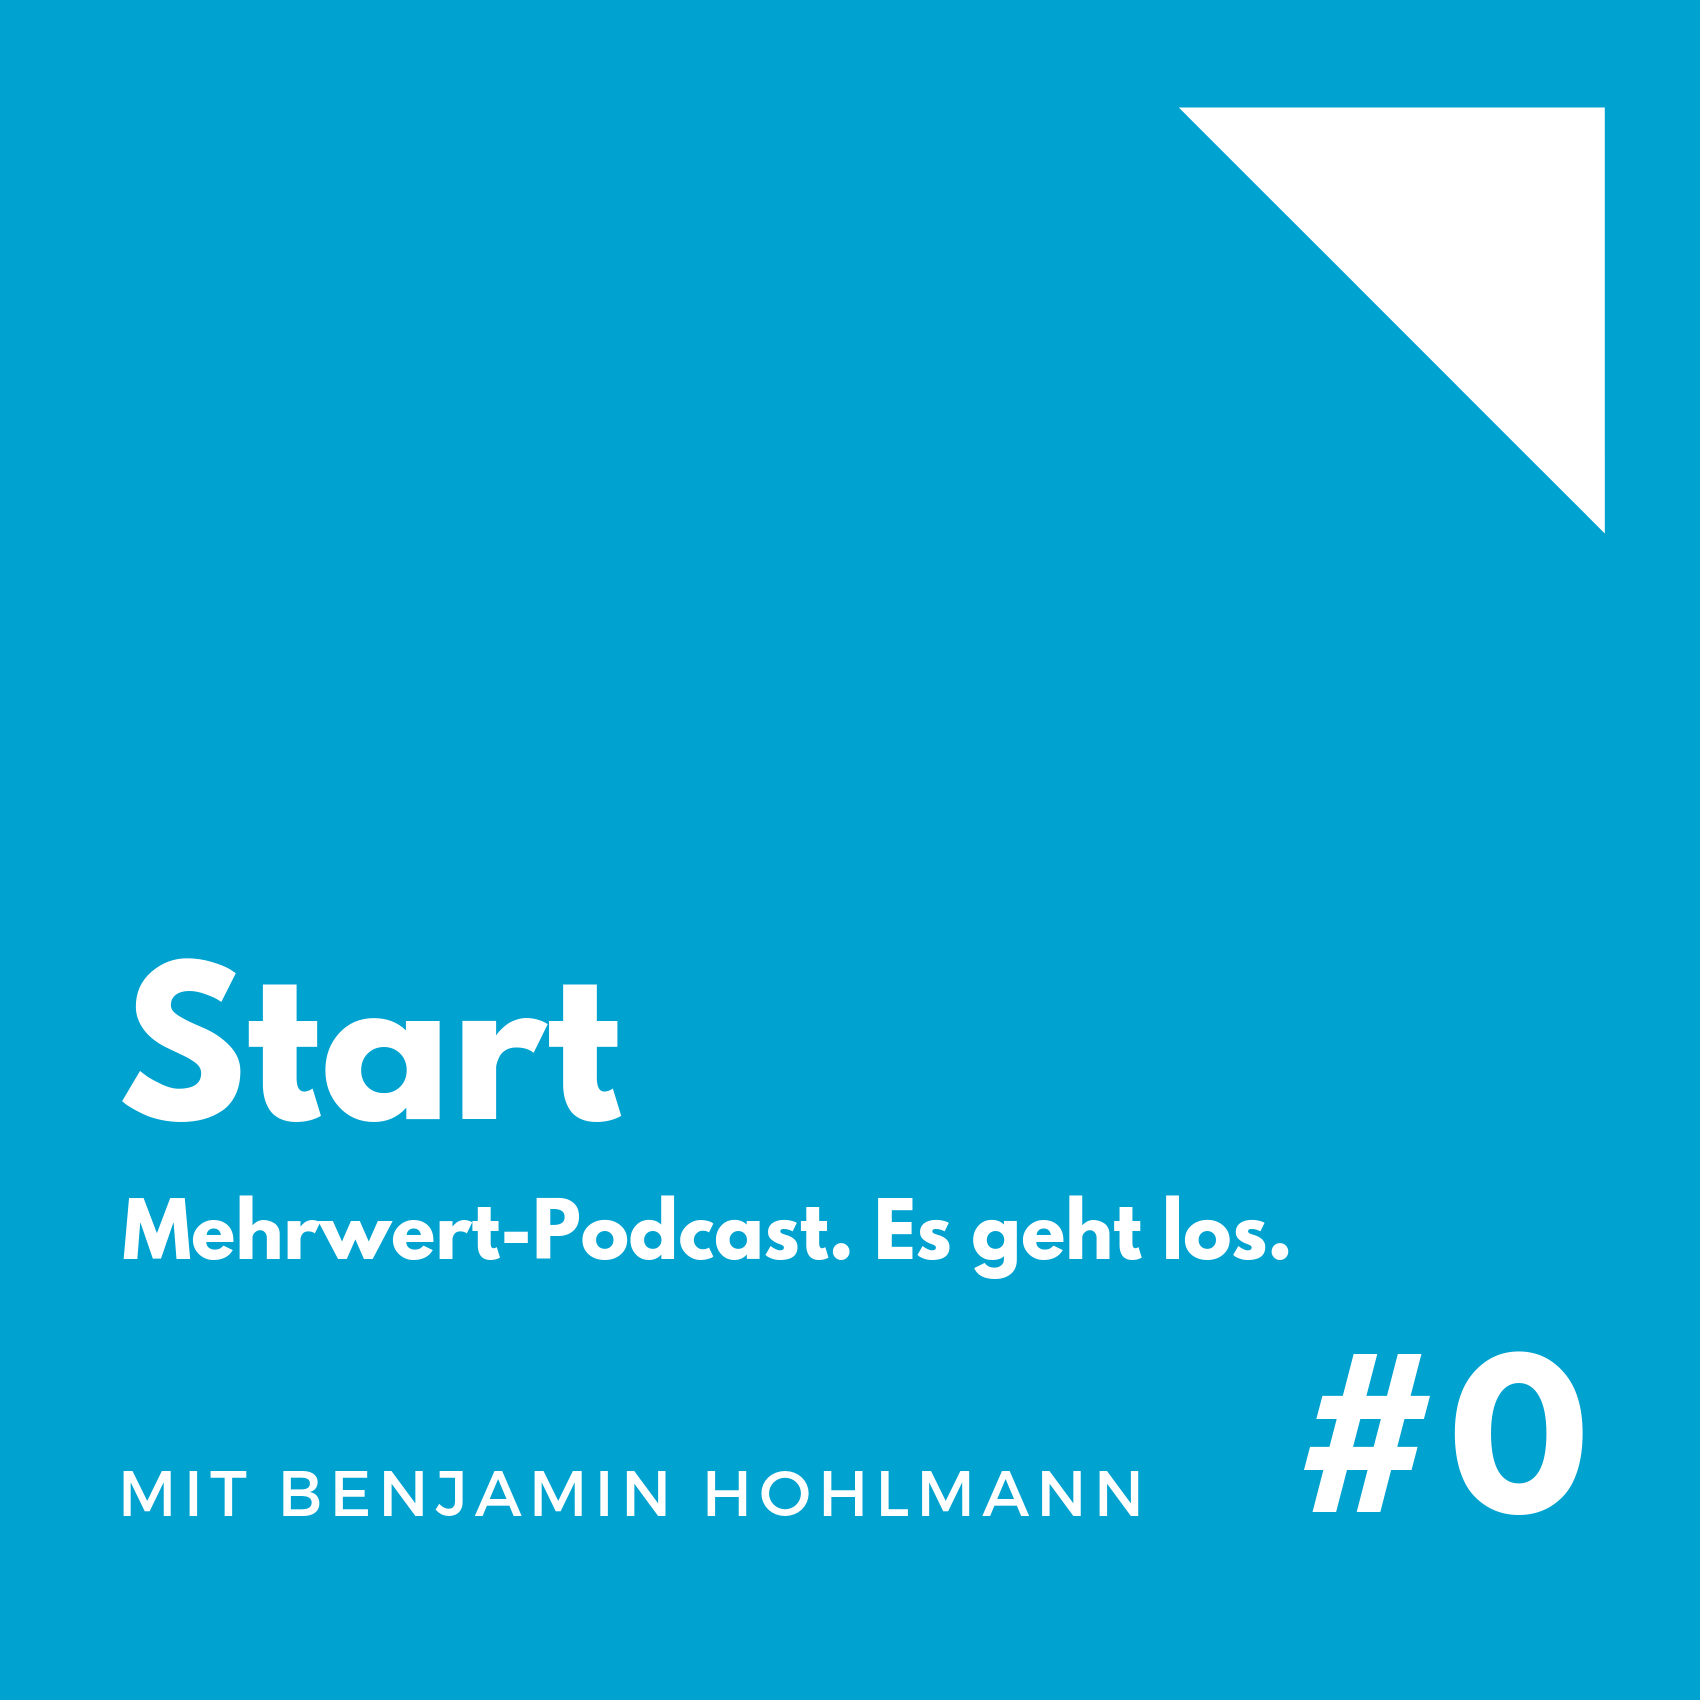 Start. Mehrwert-Podcast